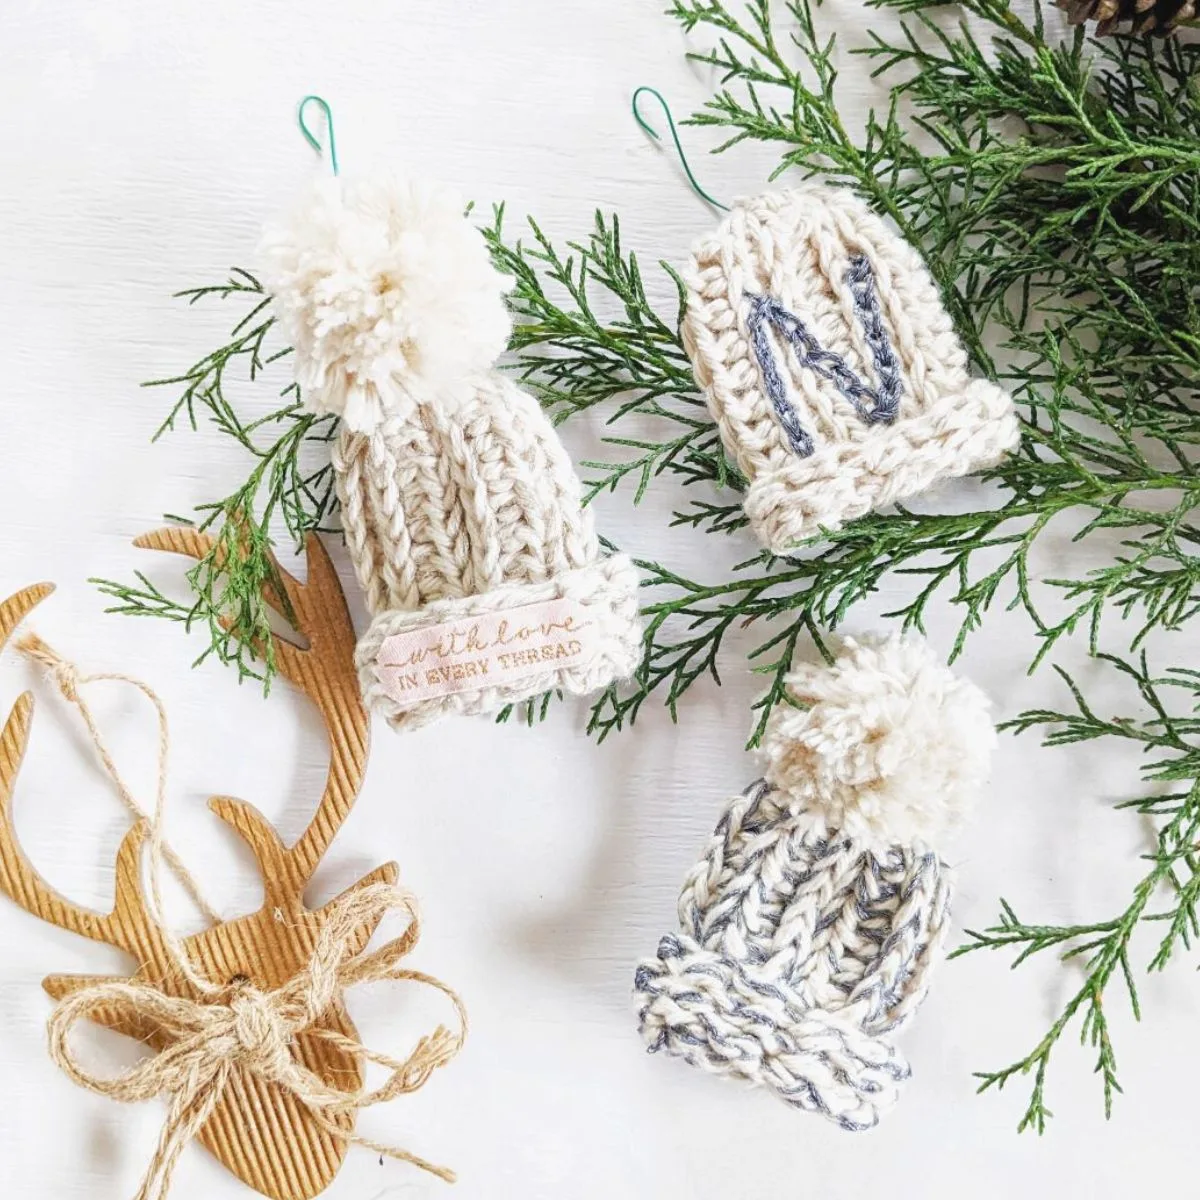 Mini crochet beanie ornament with pom poms.